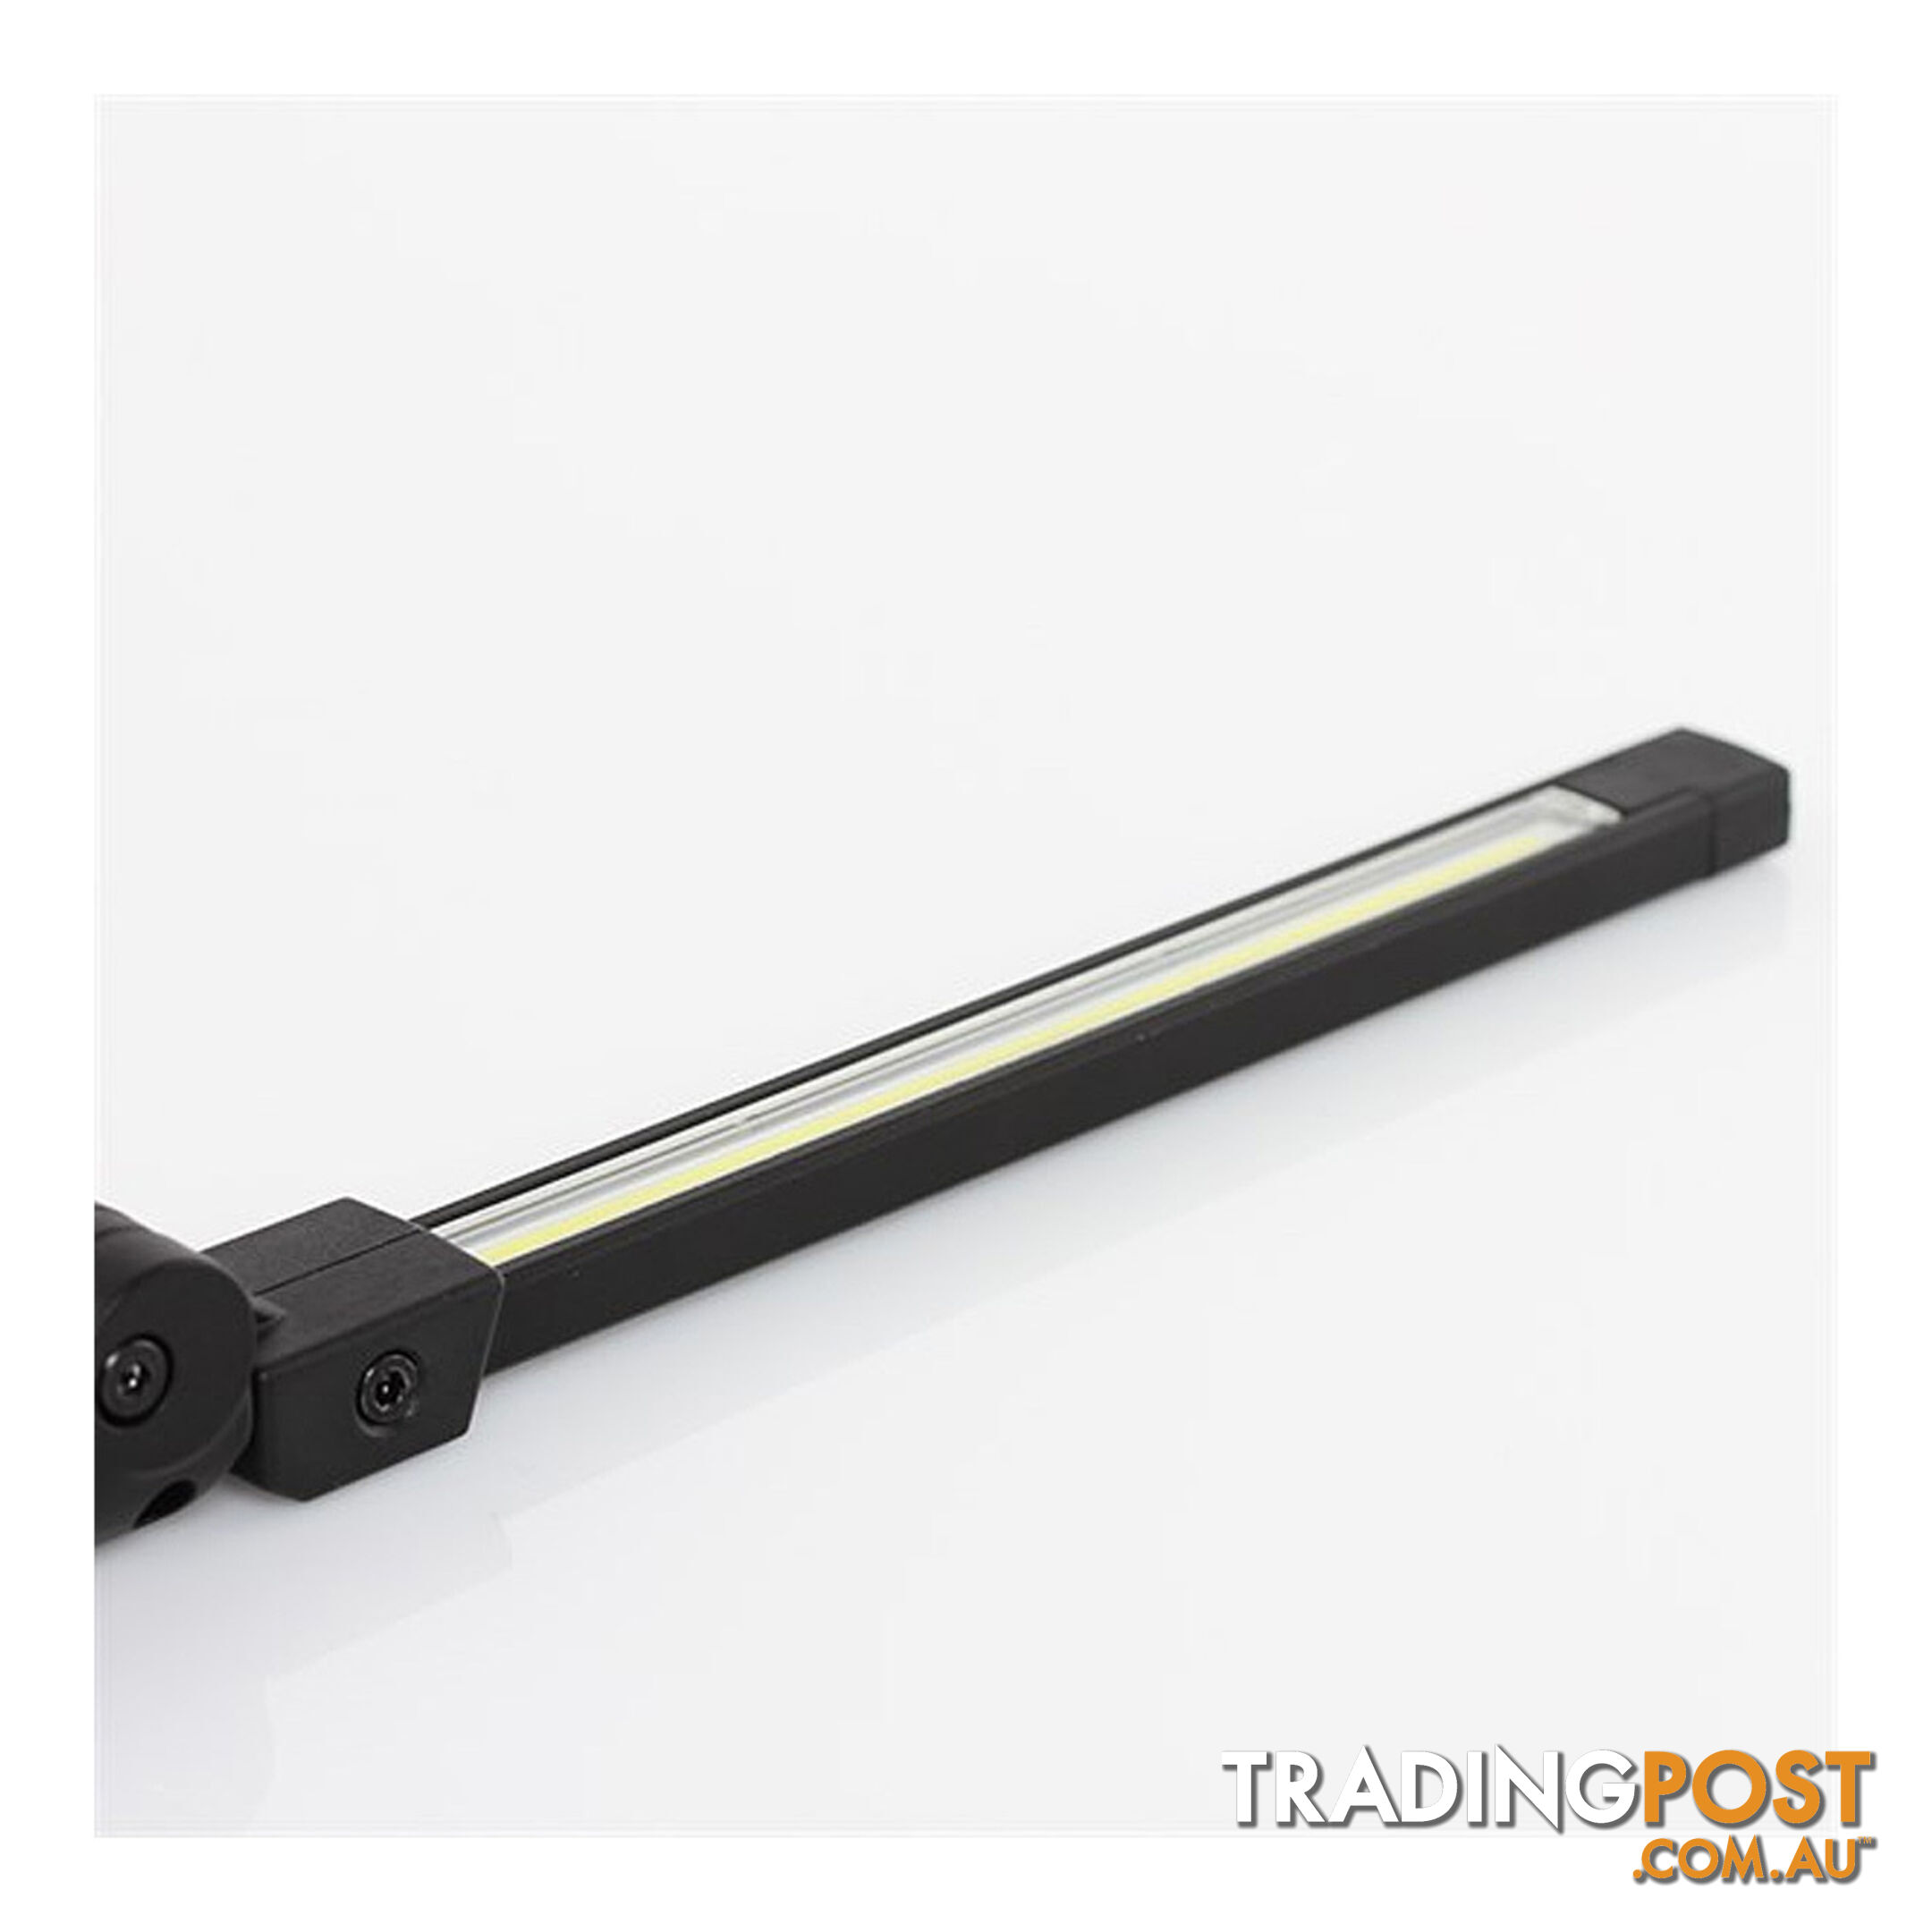 Sykes Pickavant Professional Rechargeable Foldable LED Slimlight SKU - 300606